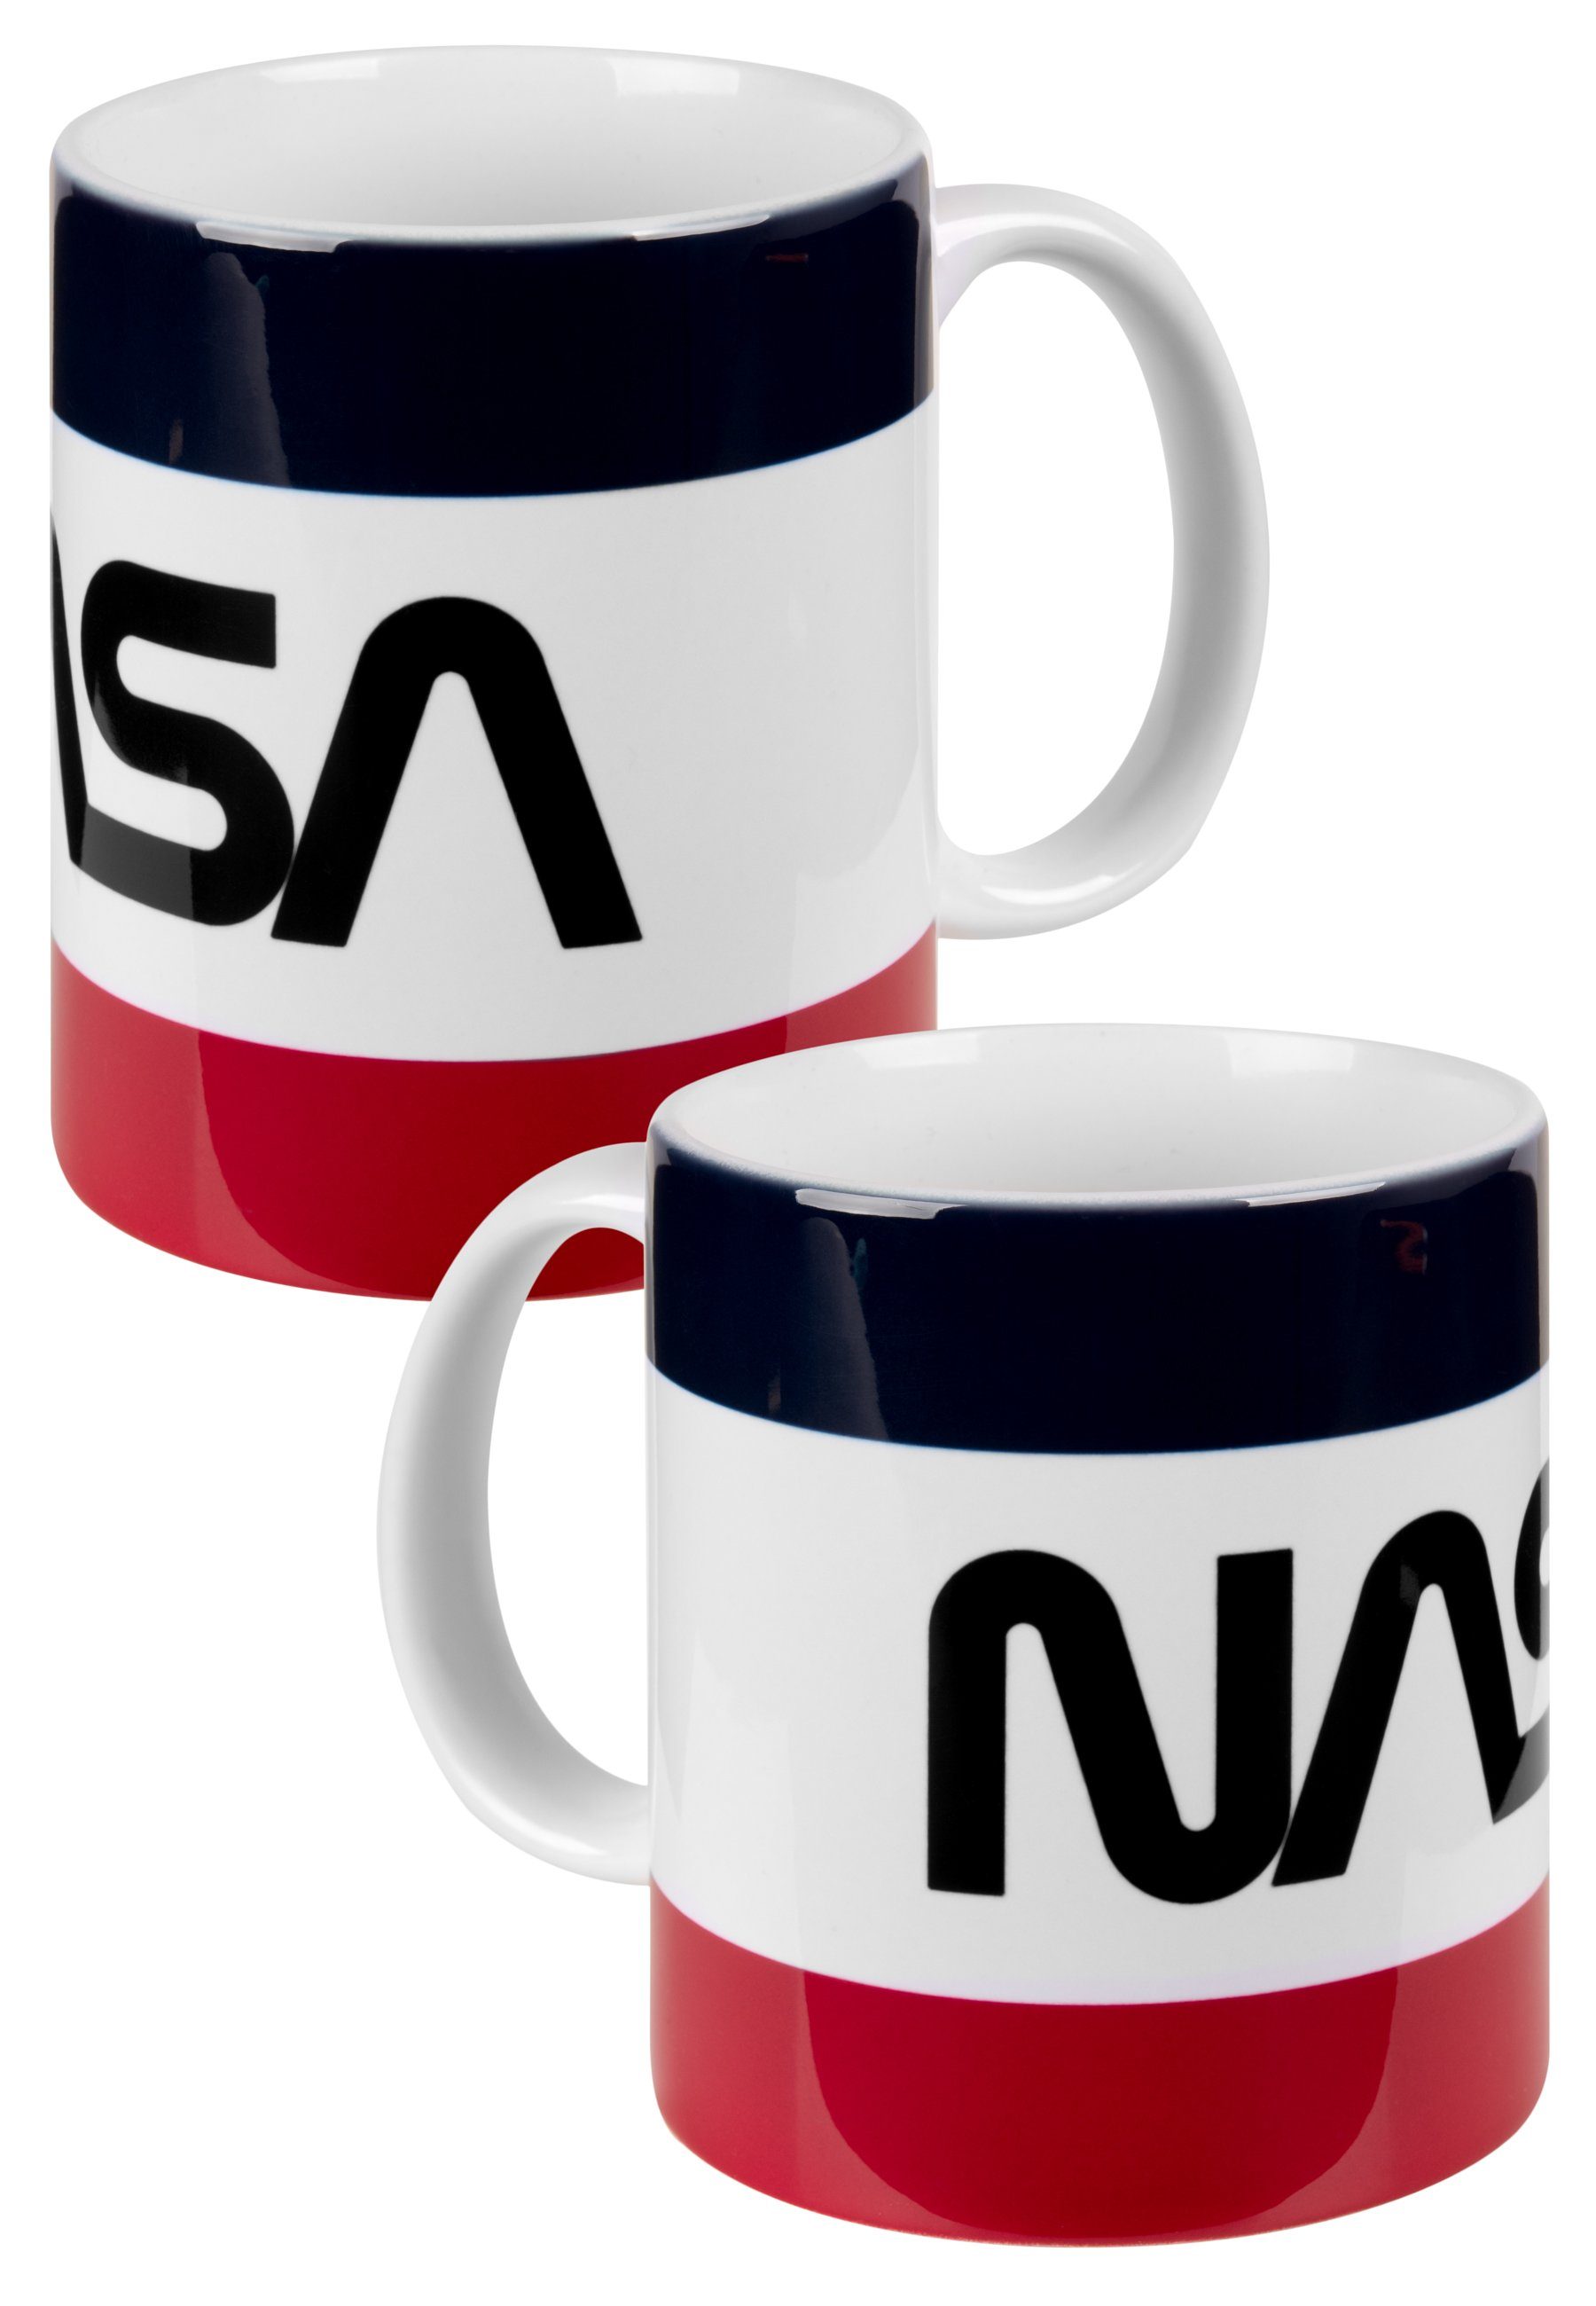 United Labels® Tasse NASA Kaffeetasse Keramik aus Keramik 320 ml